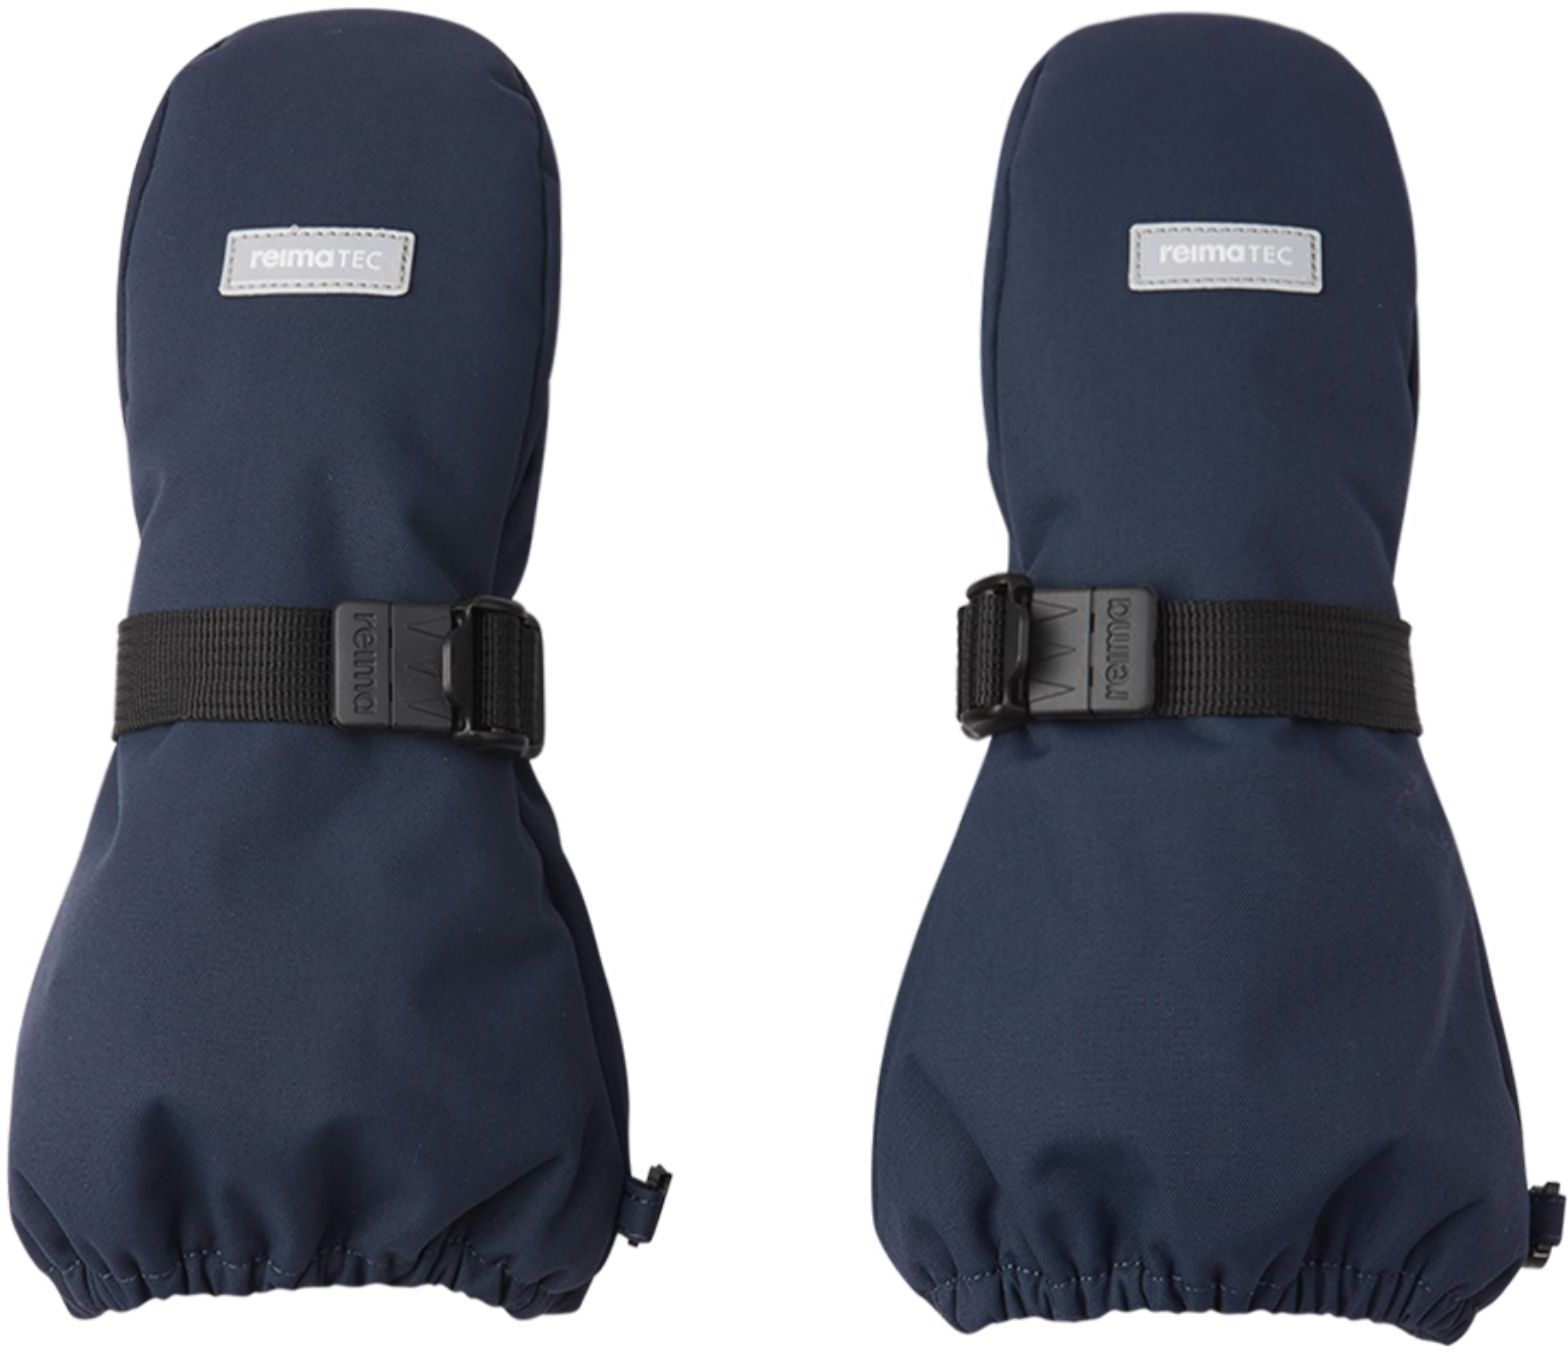 527326-6980_Reima Ote - Navy teple zimne chlapcenske rukavice